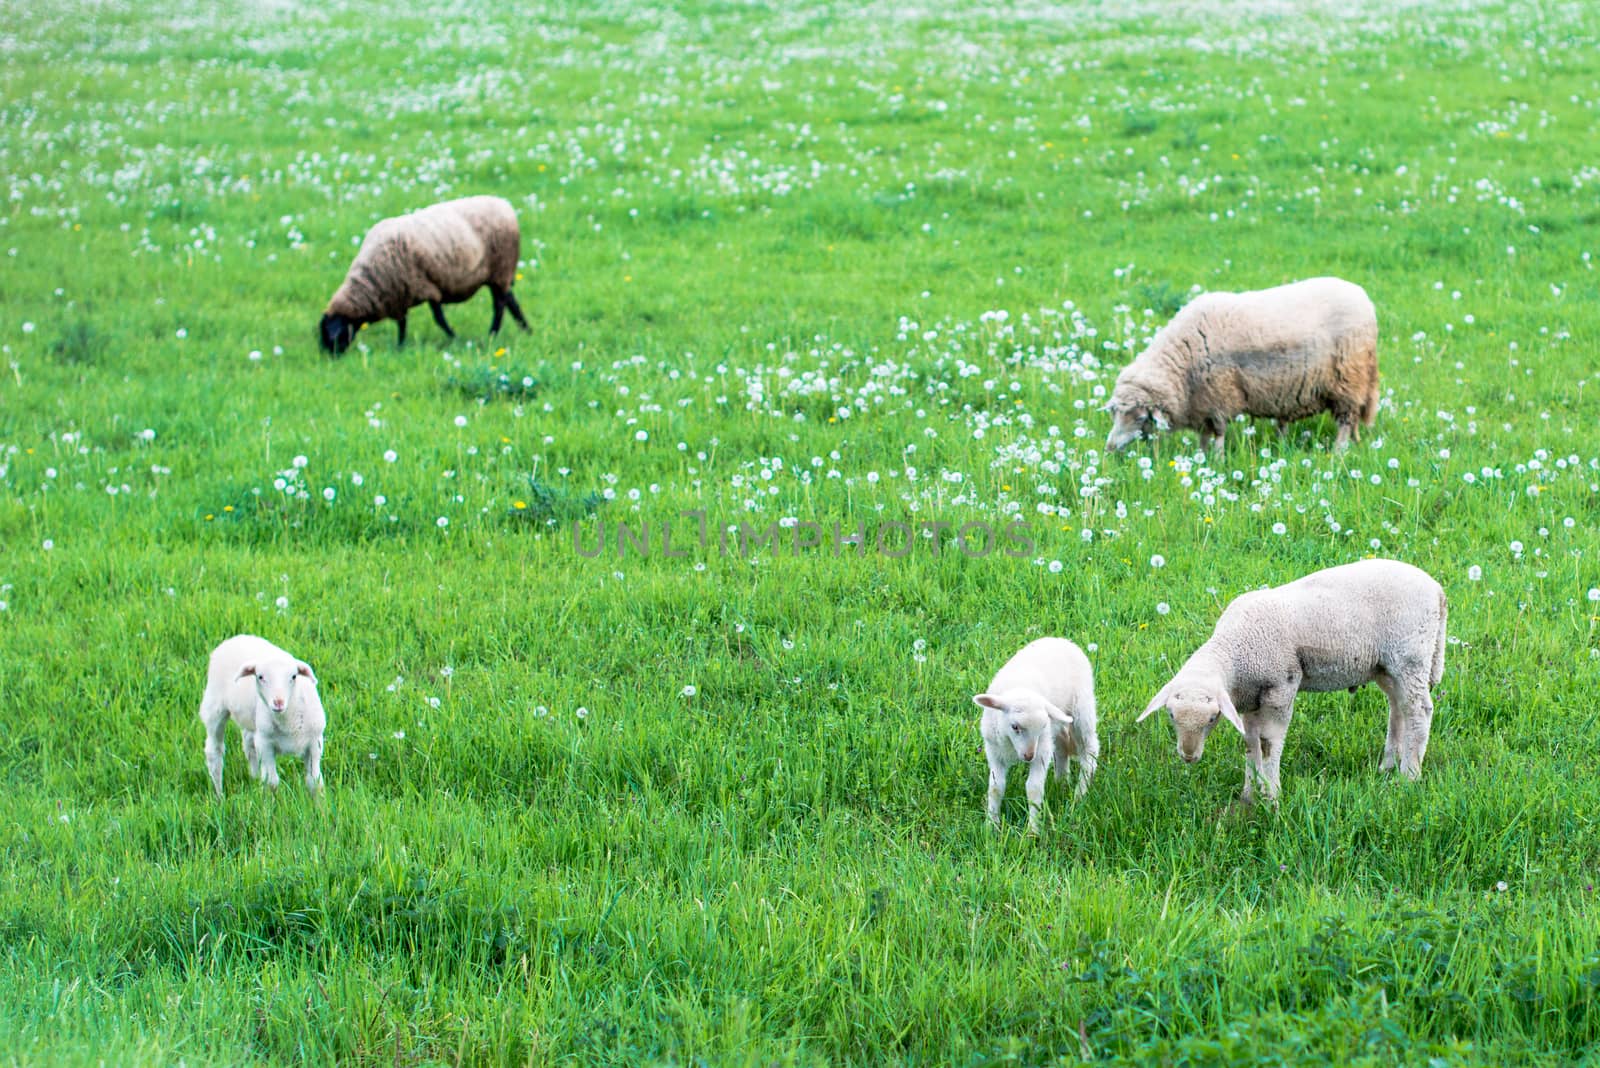 Cute sheep herd at green summer field full of dandelions